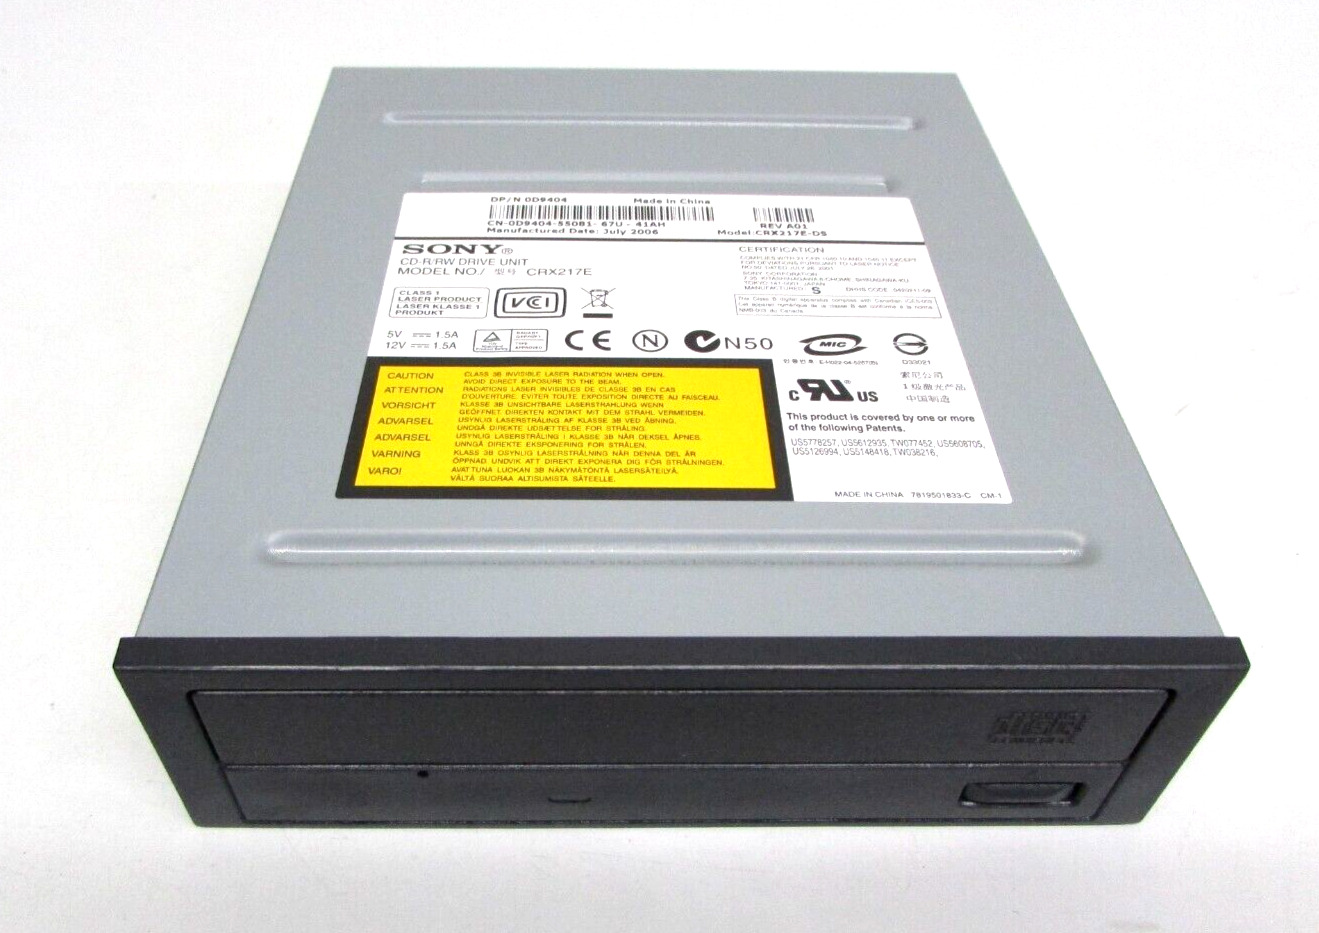 Vintage Sony Dell Internal IDE CD/RW CD Burner Optical Drive CRX217E PC D9404